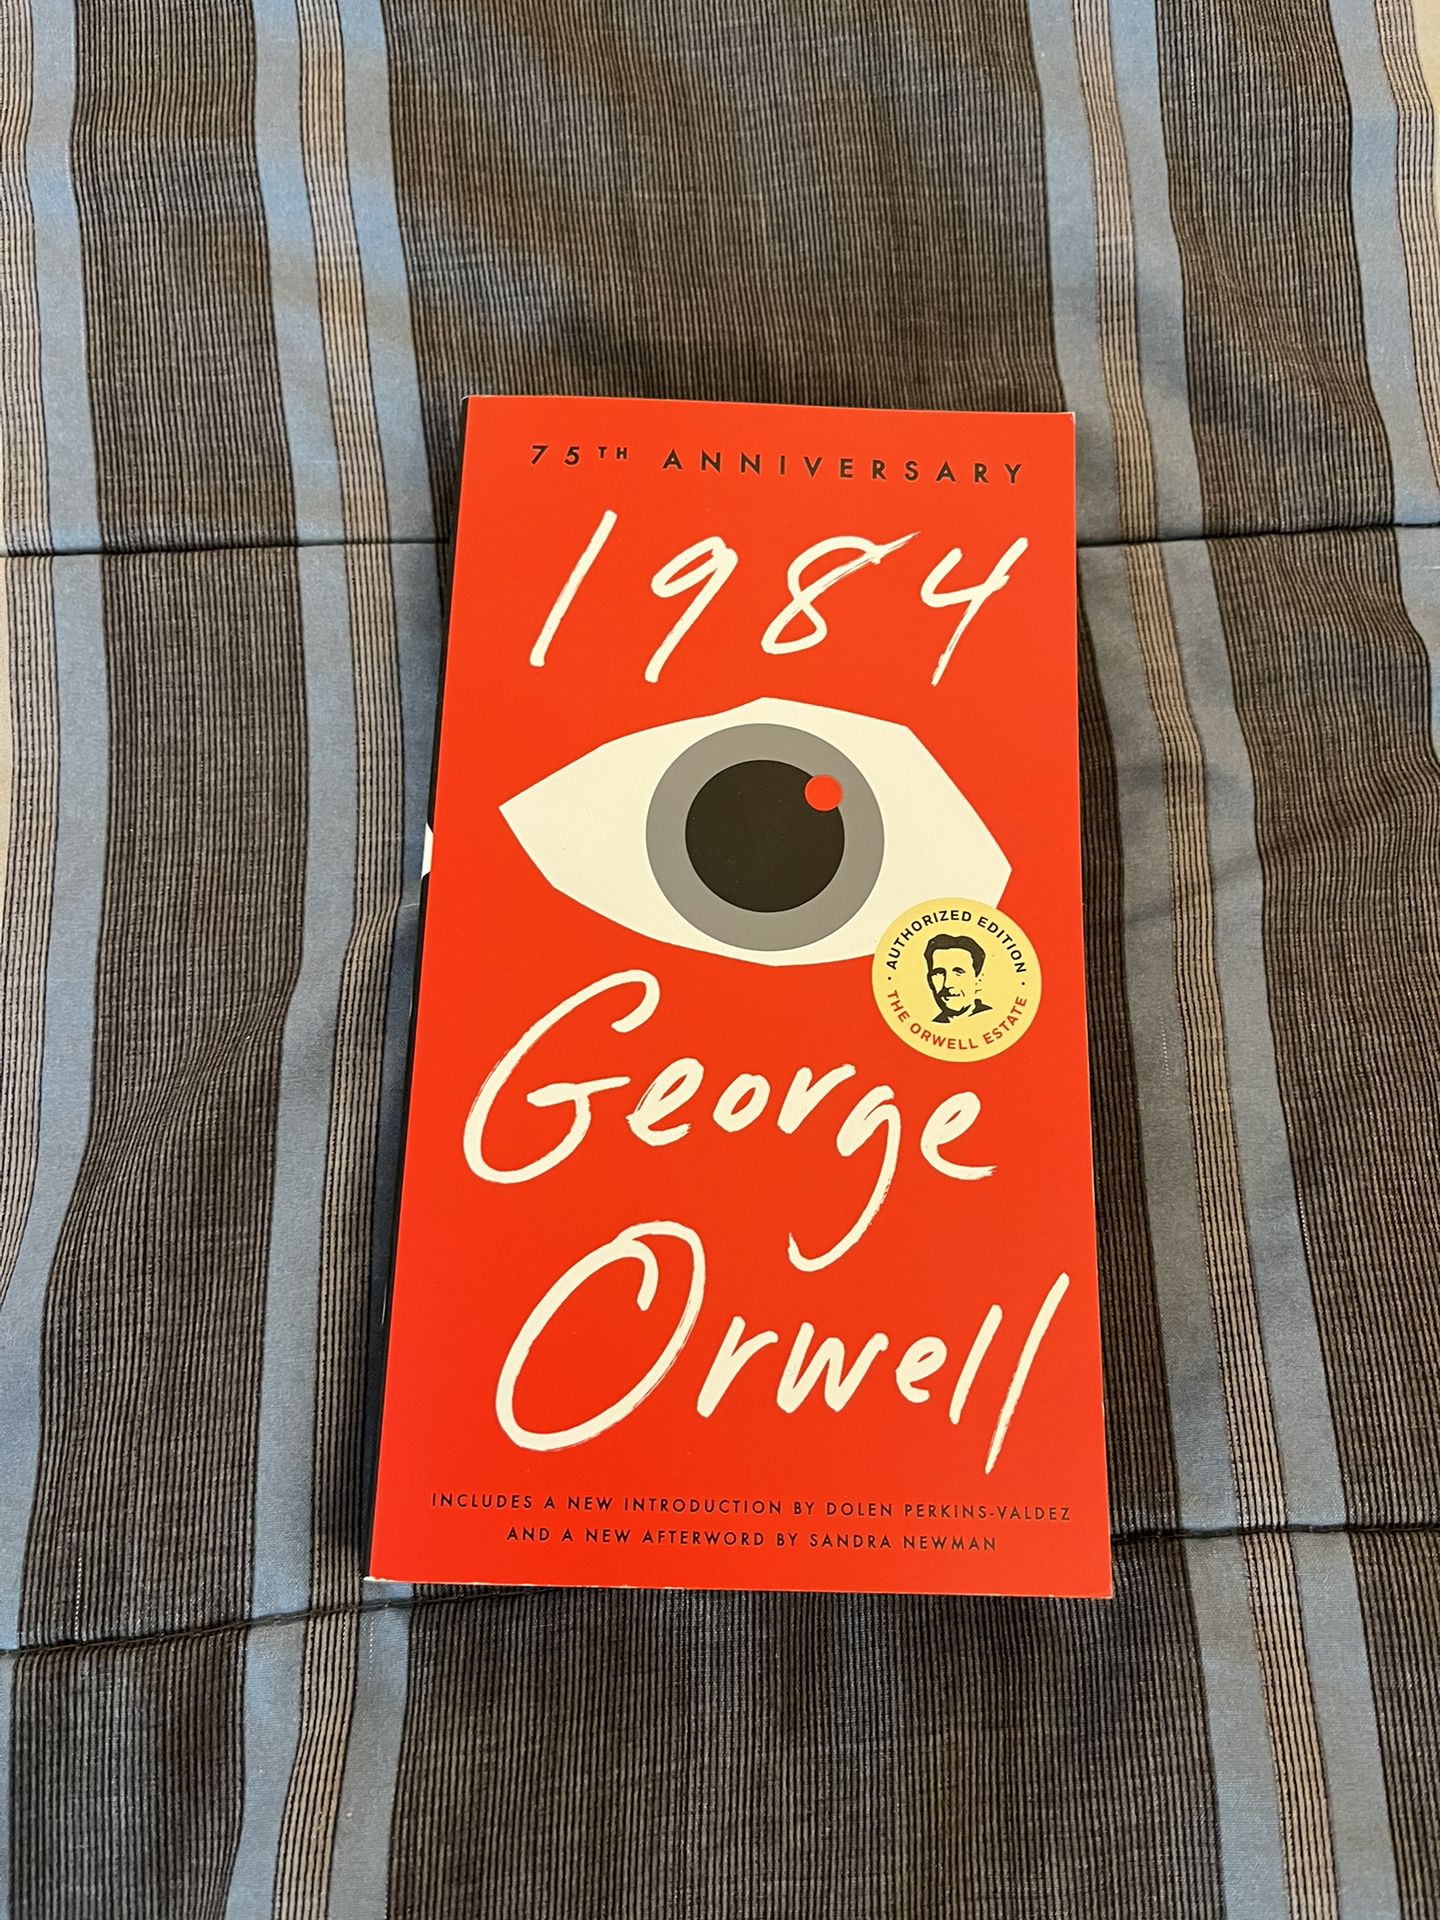 1984 - George Orwell (Amazing Condition)